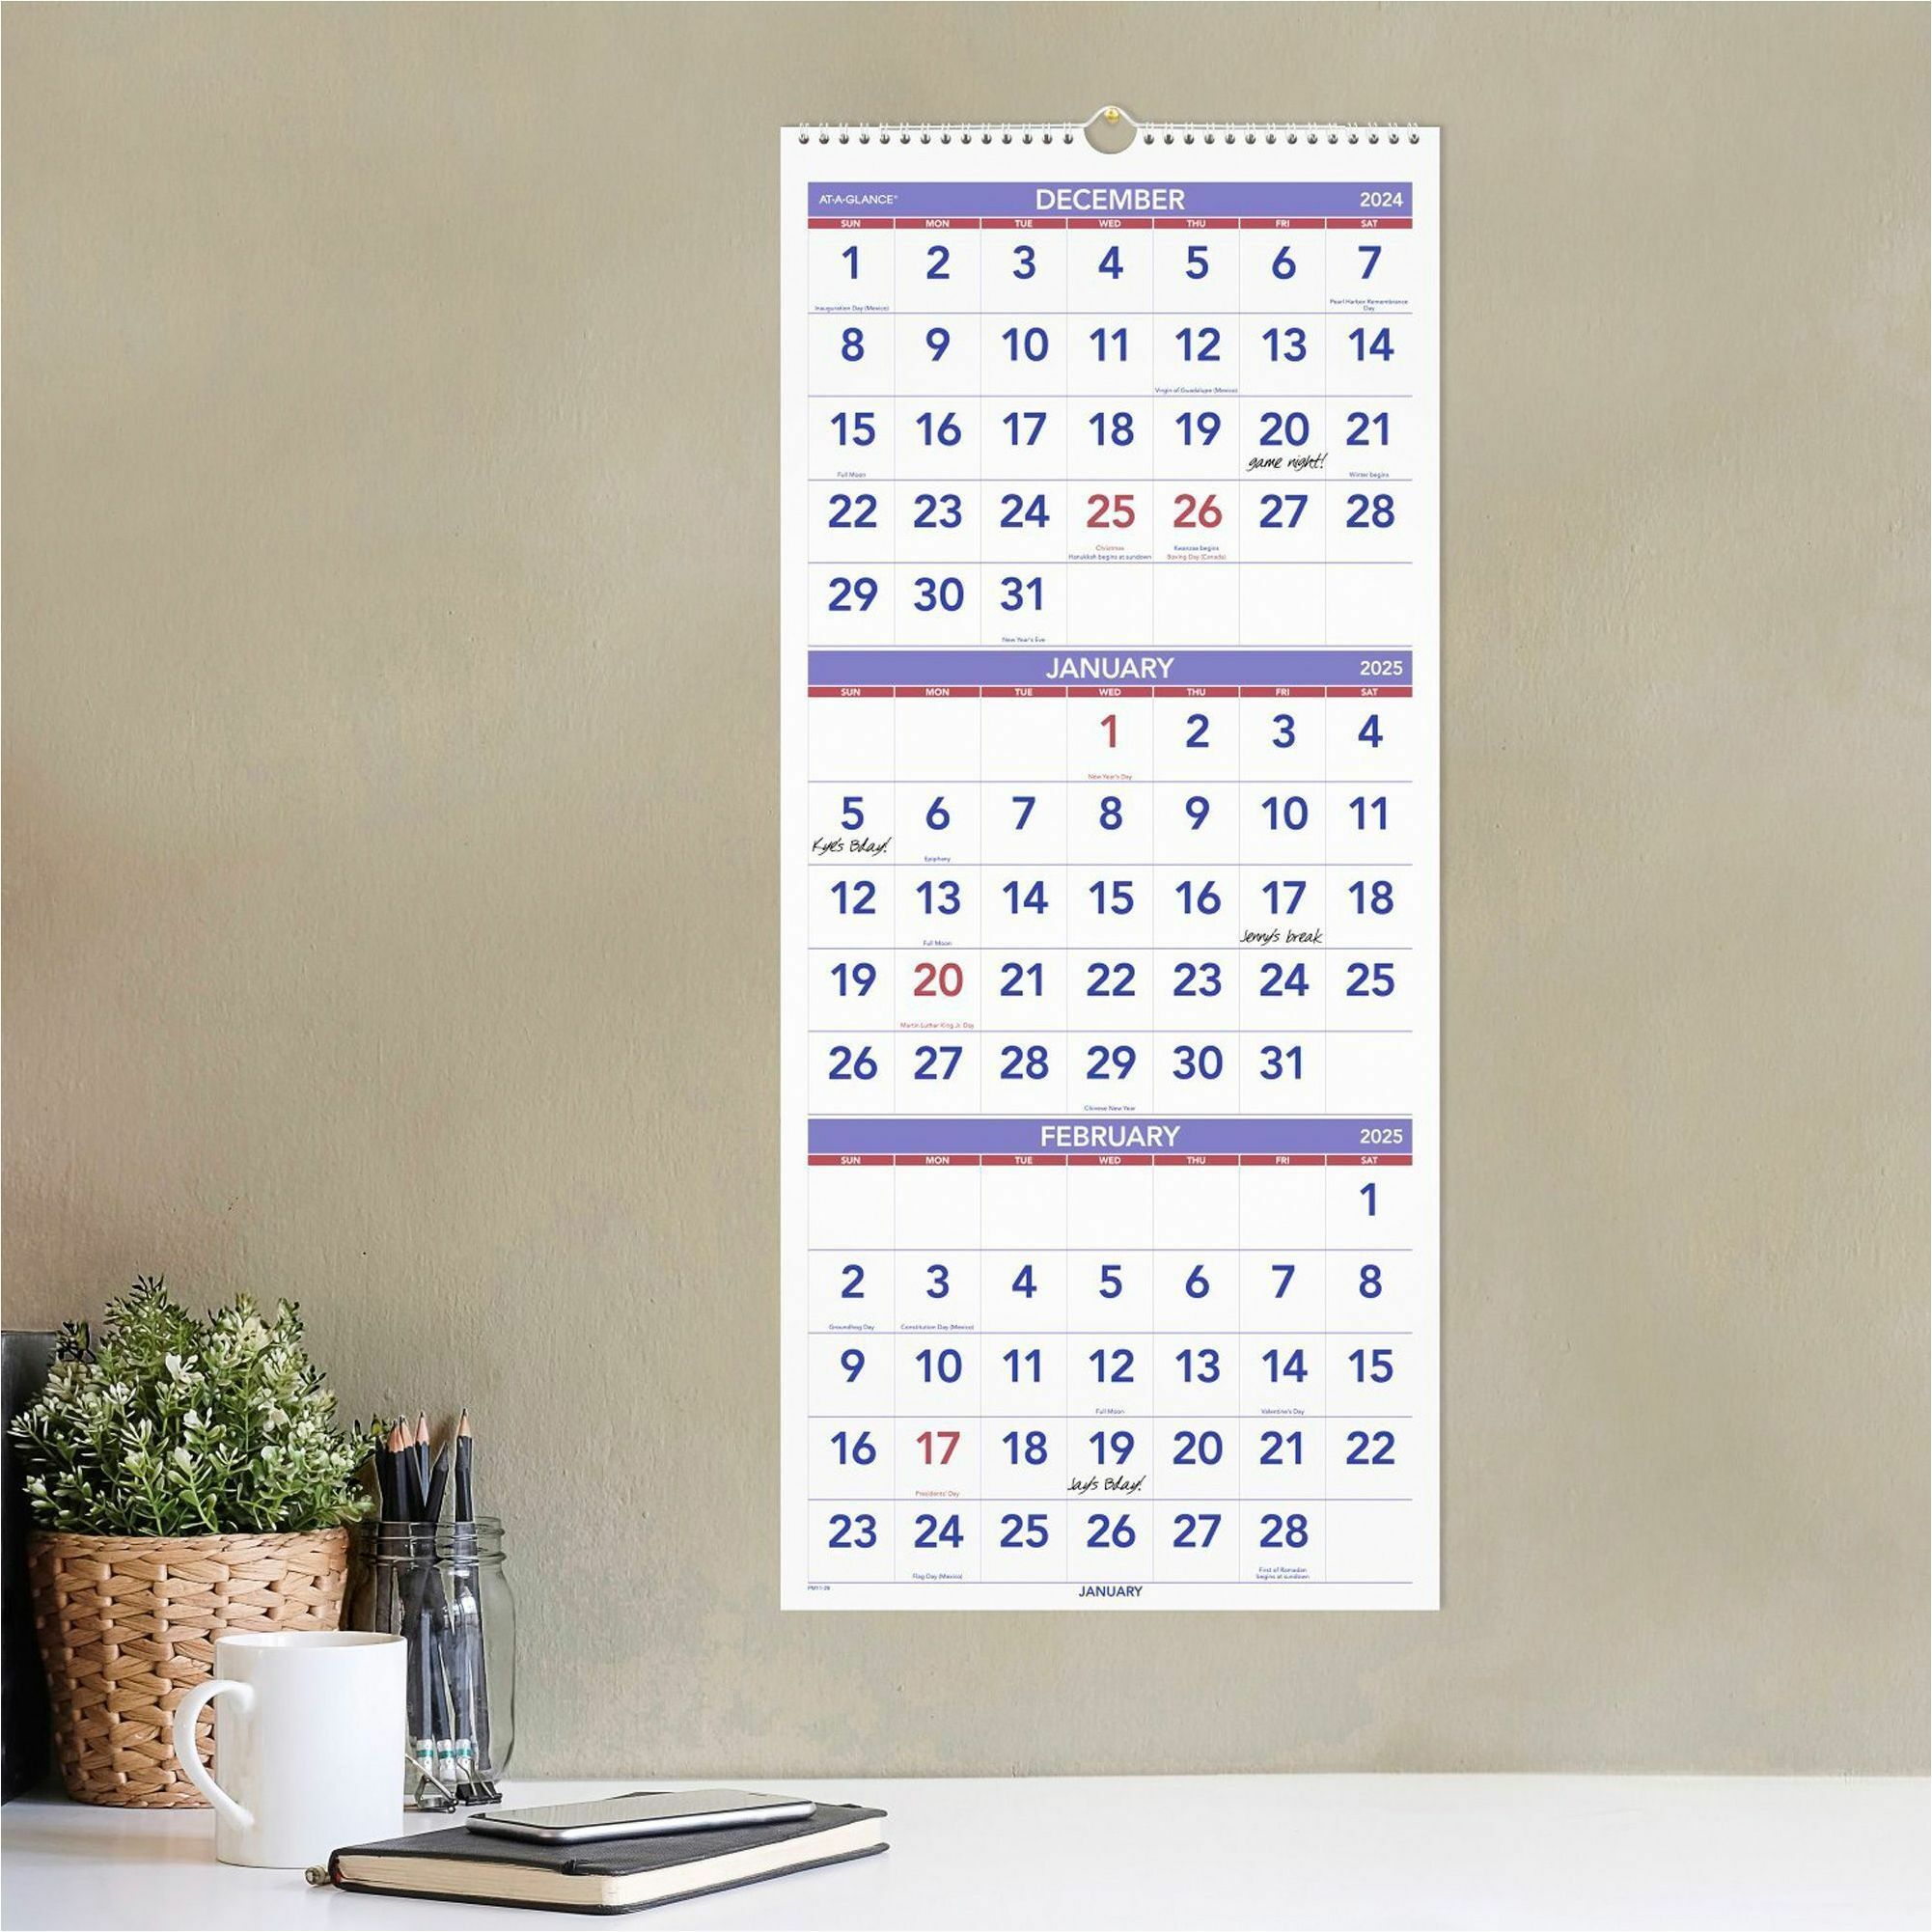 AtAGlance 3 Month Reference Wall Calendar GOS